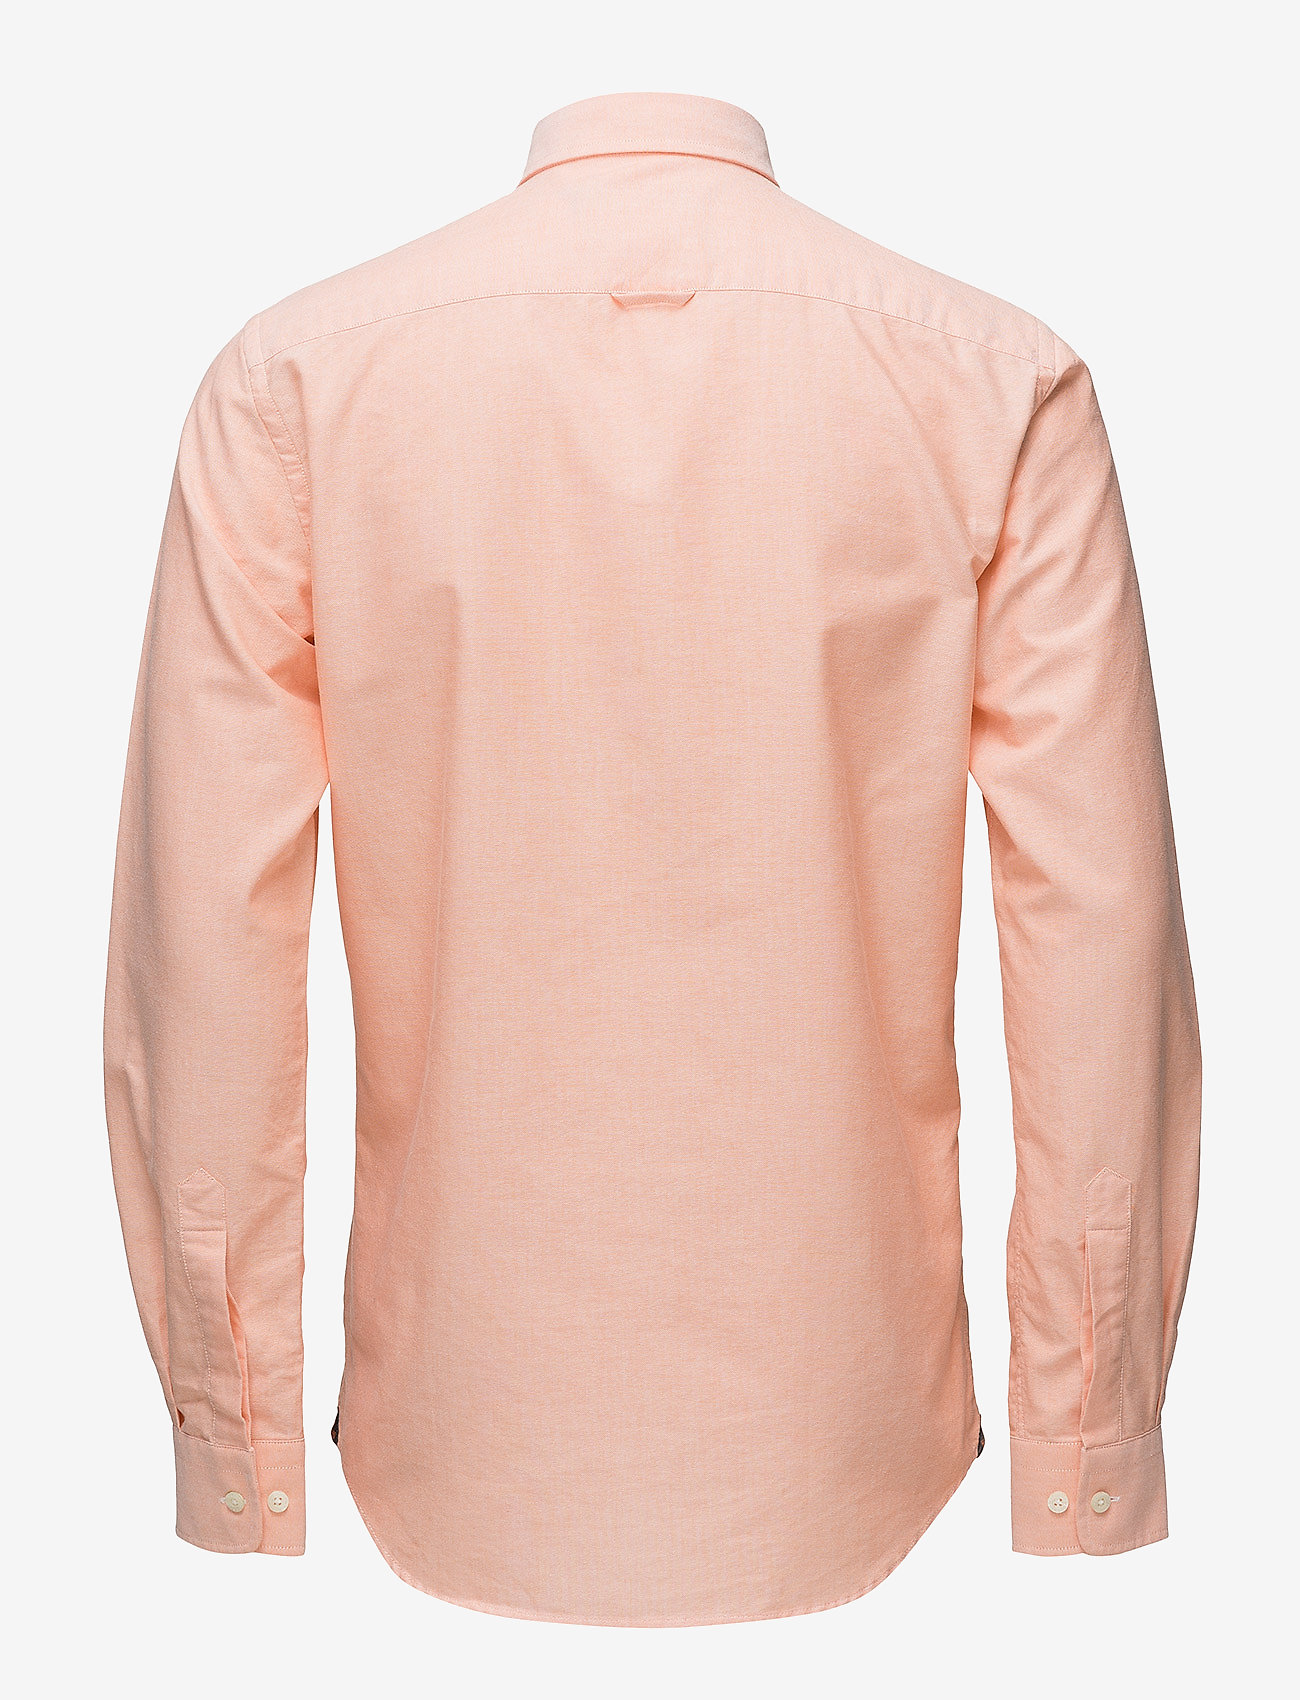 Morris - Douglas Shirt-Slim Fit - basic skjorter - orange - 1